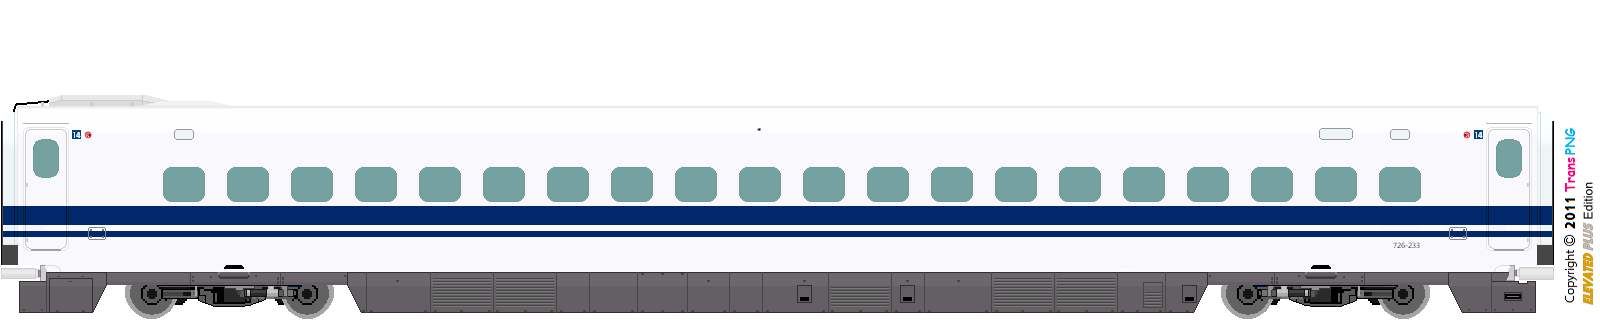 9010 - [9010] Central Japan Railway 52287846254_f257de1478_o